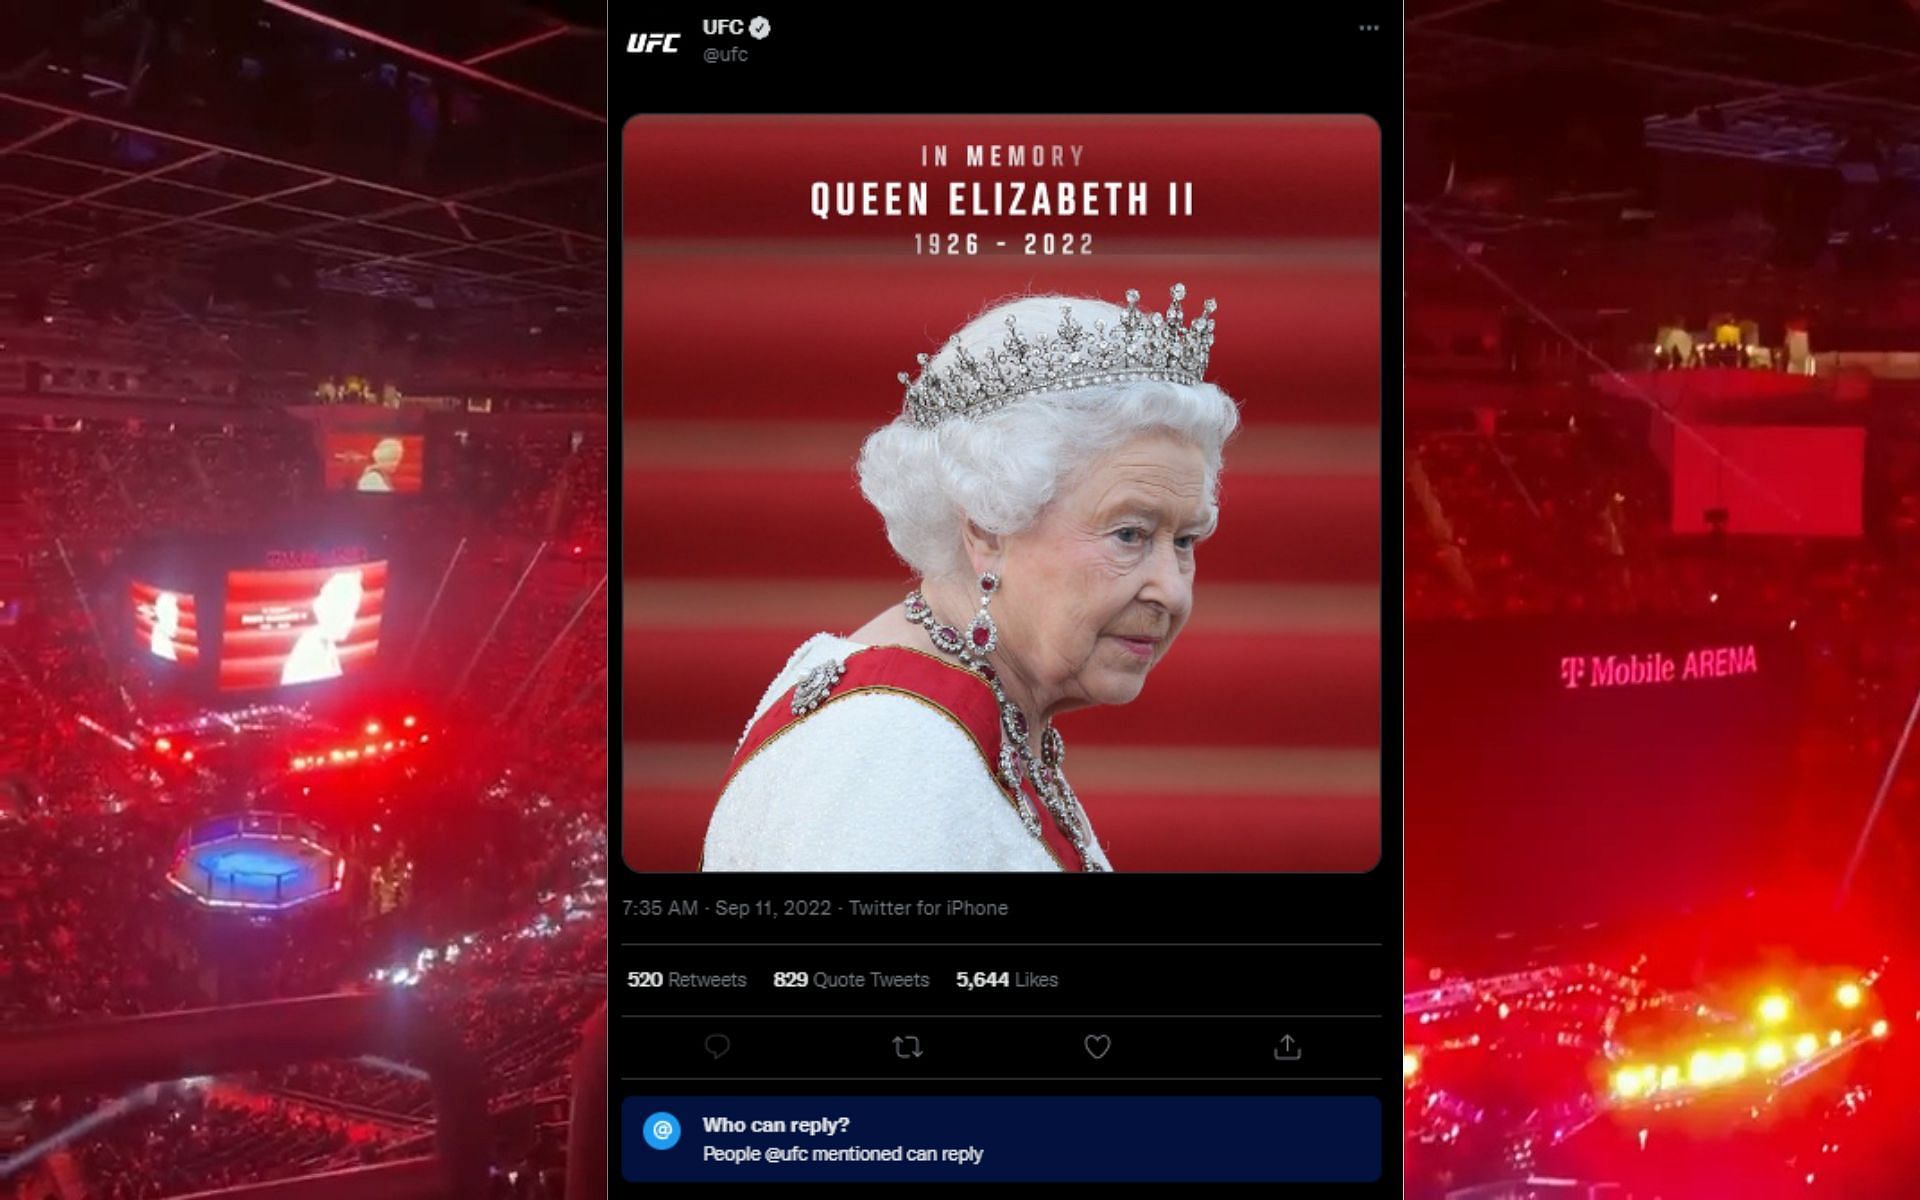 The UFC bans comments under the Queen's tribute